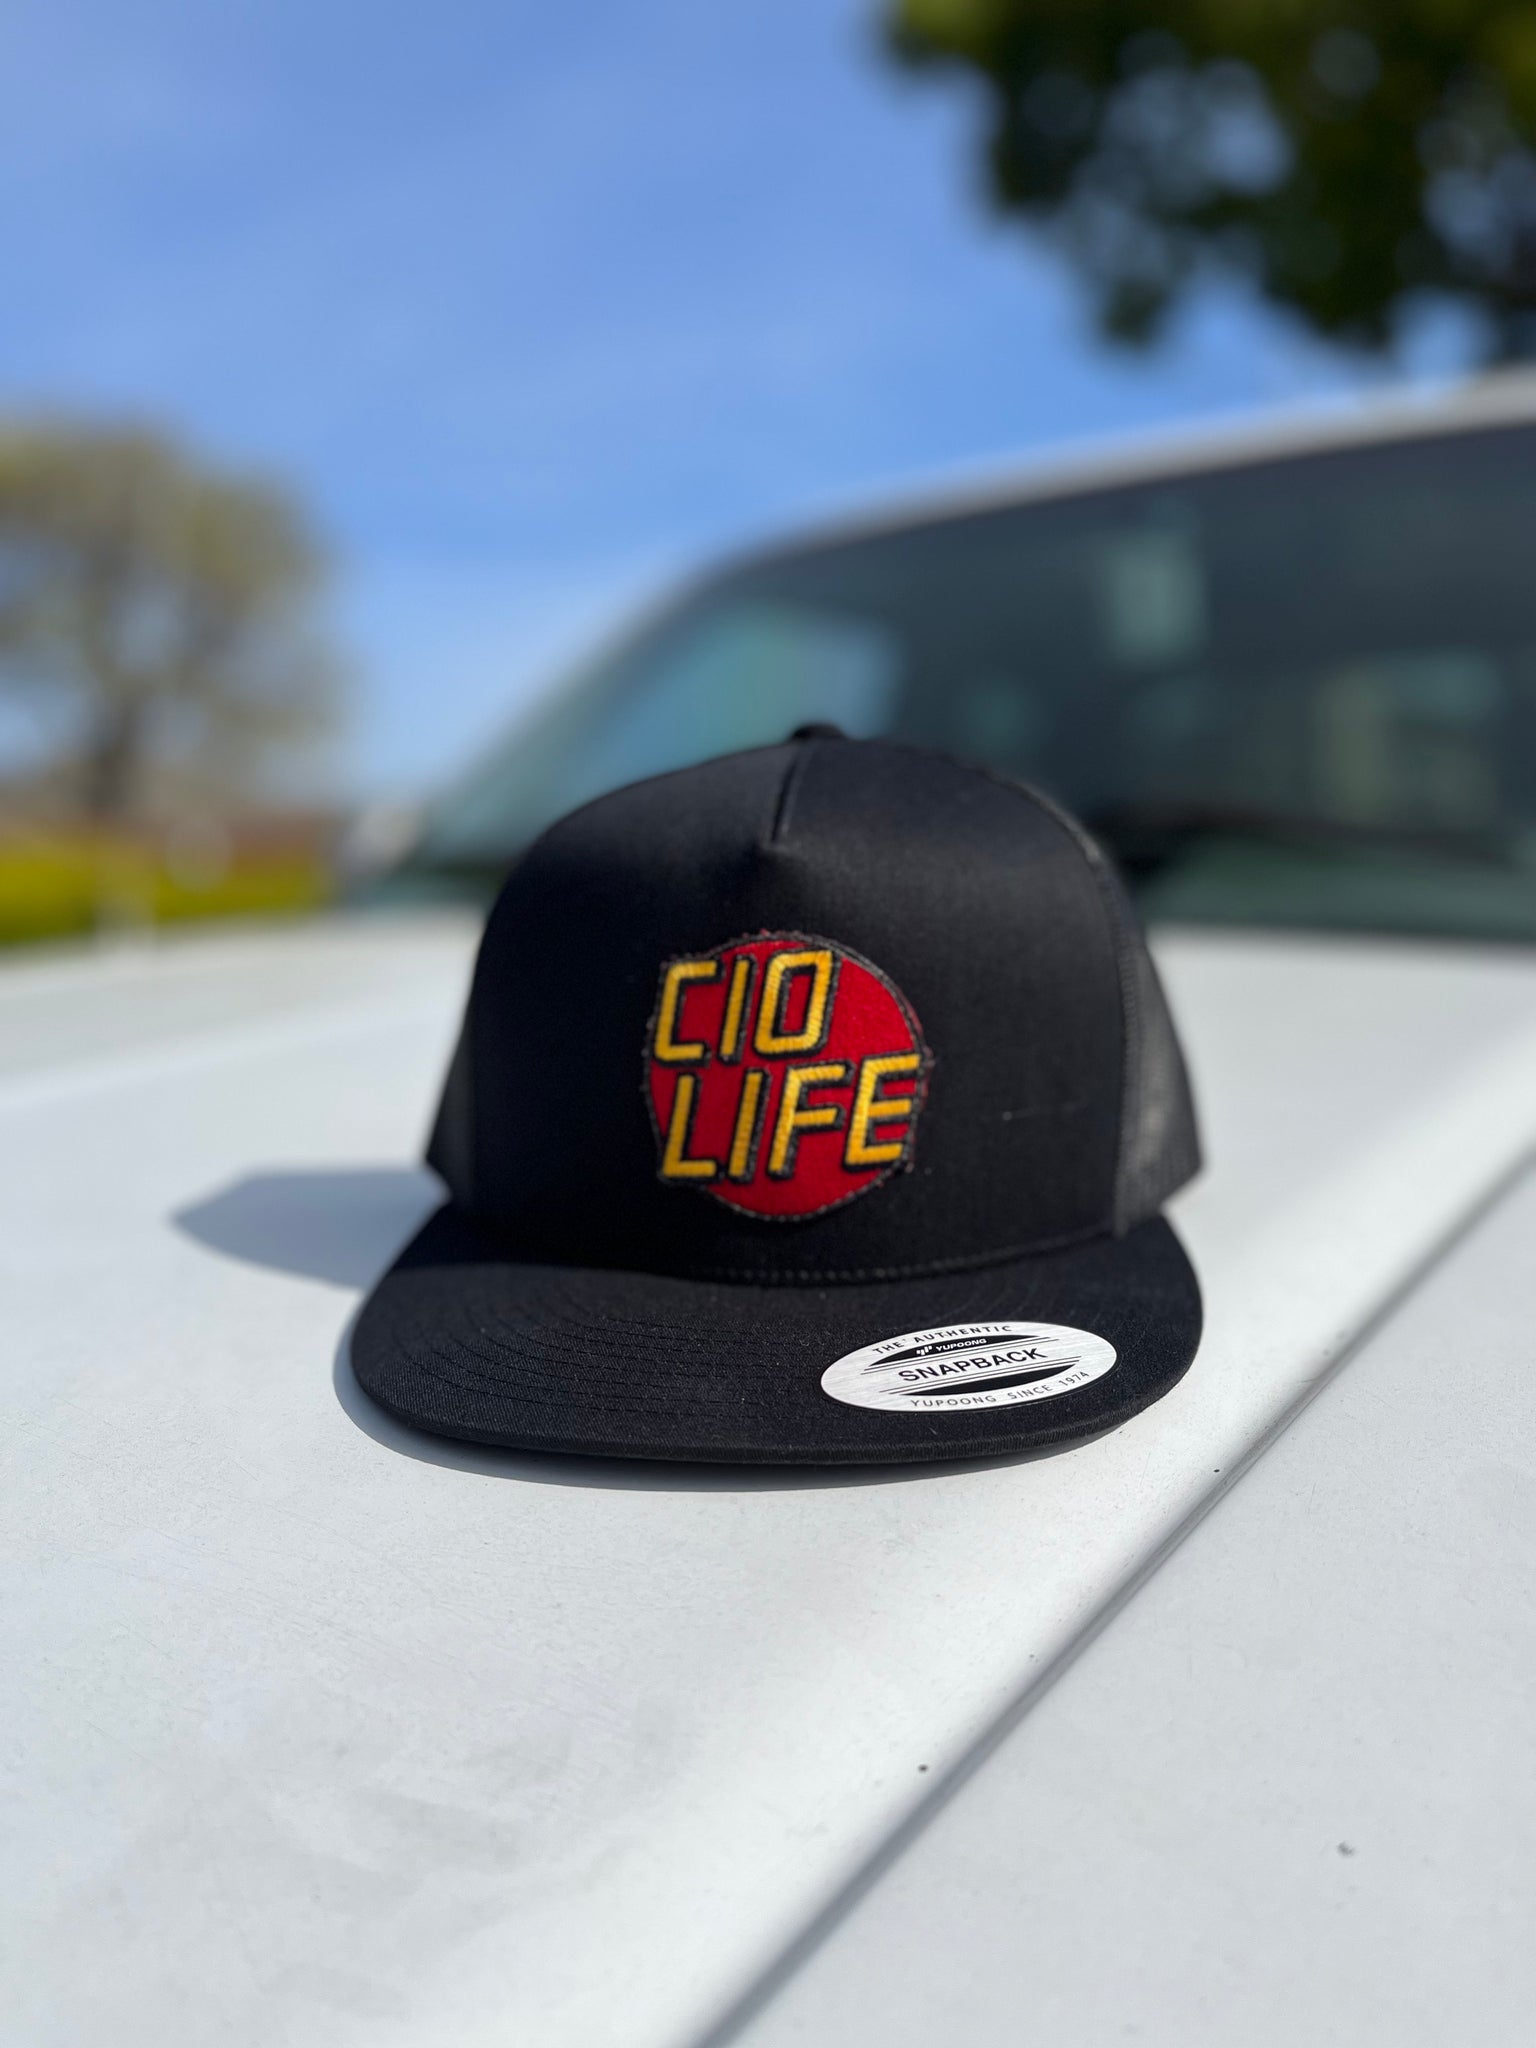 C10 Life Hats